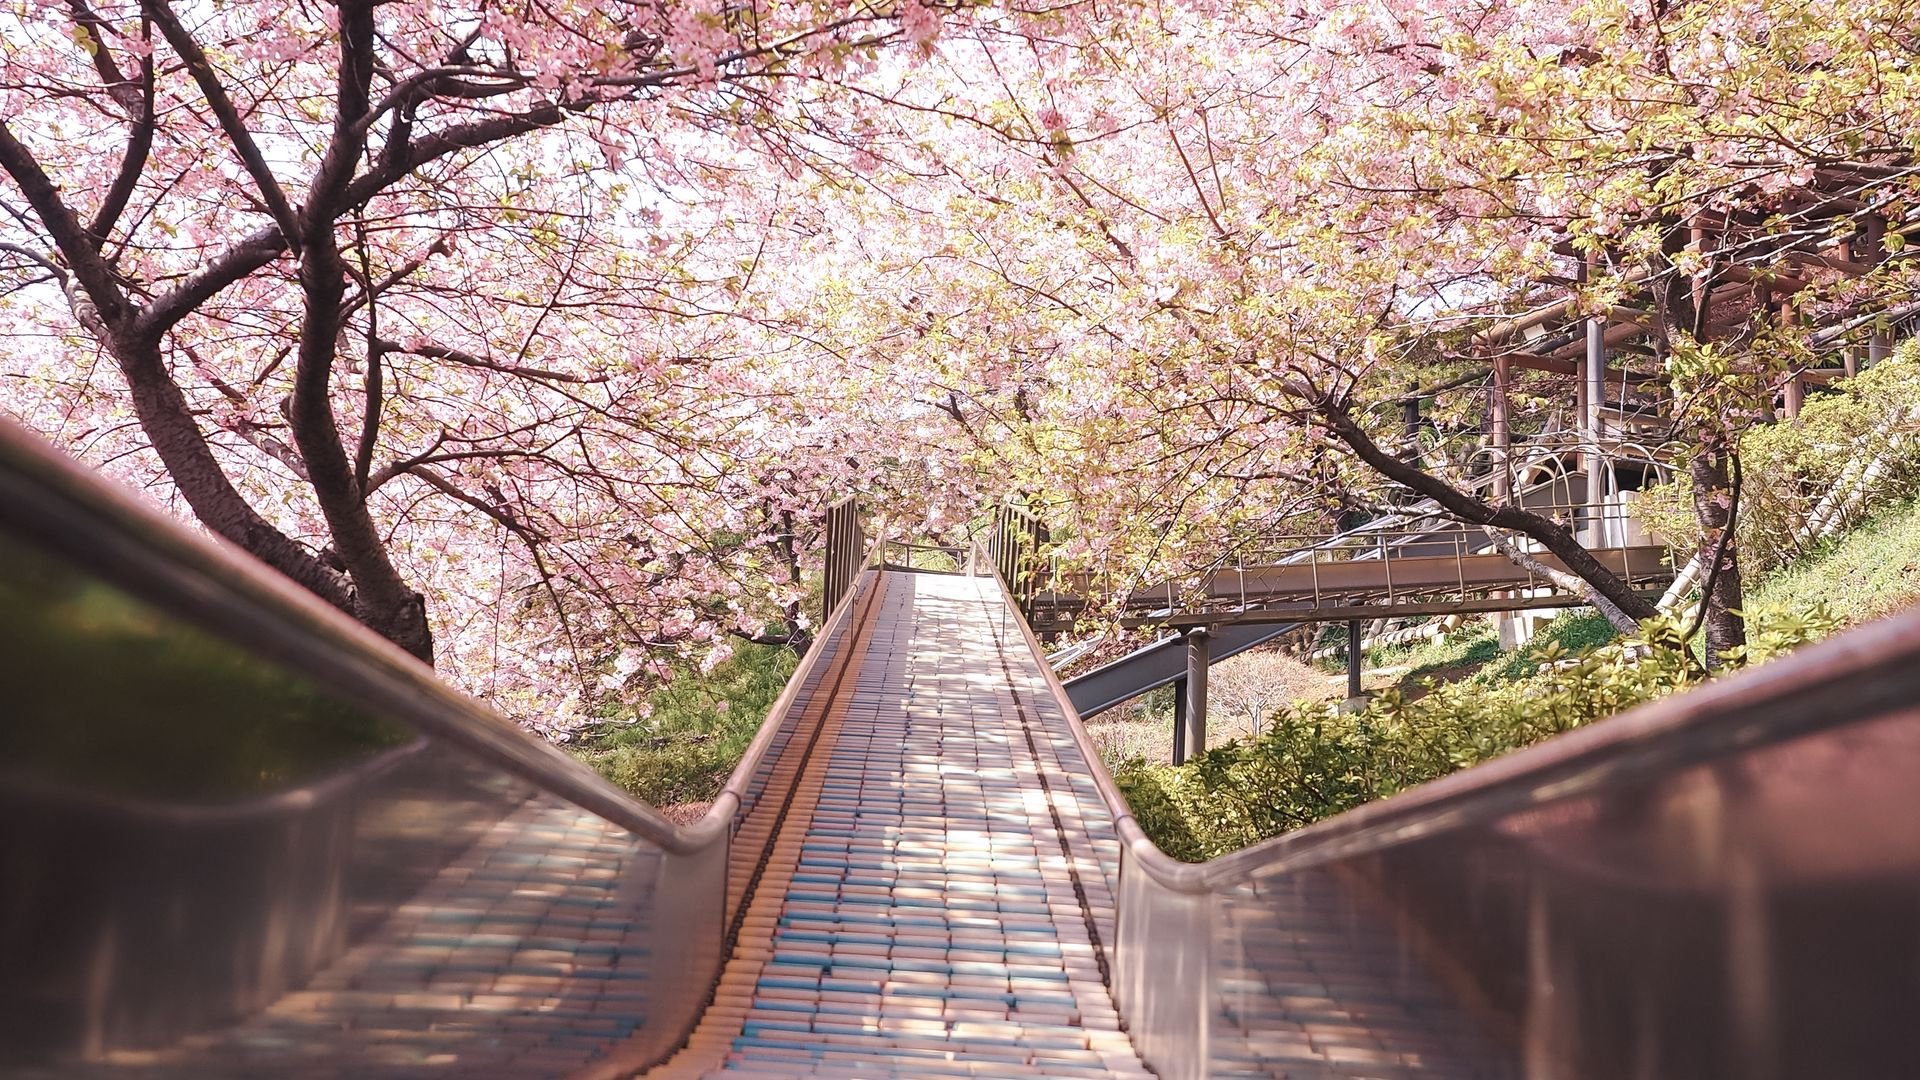 Download wallpaper 1920x1080 bridge, path, sakura, flowers, spring, japan full hd, hdtv, fhd, 1080p HD background